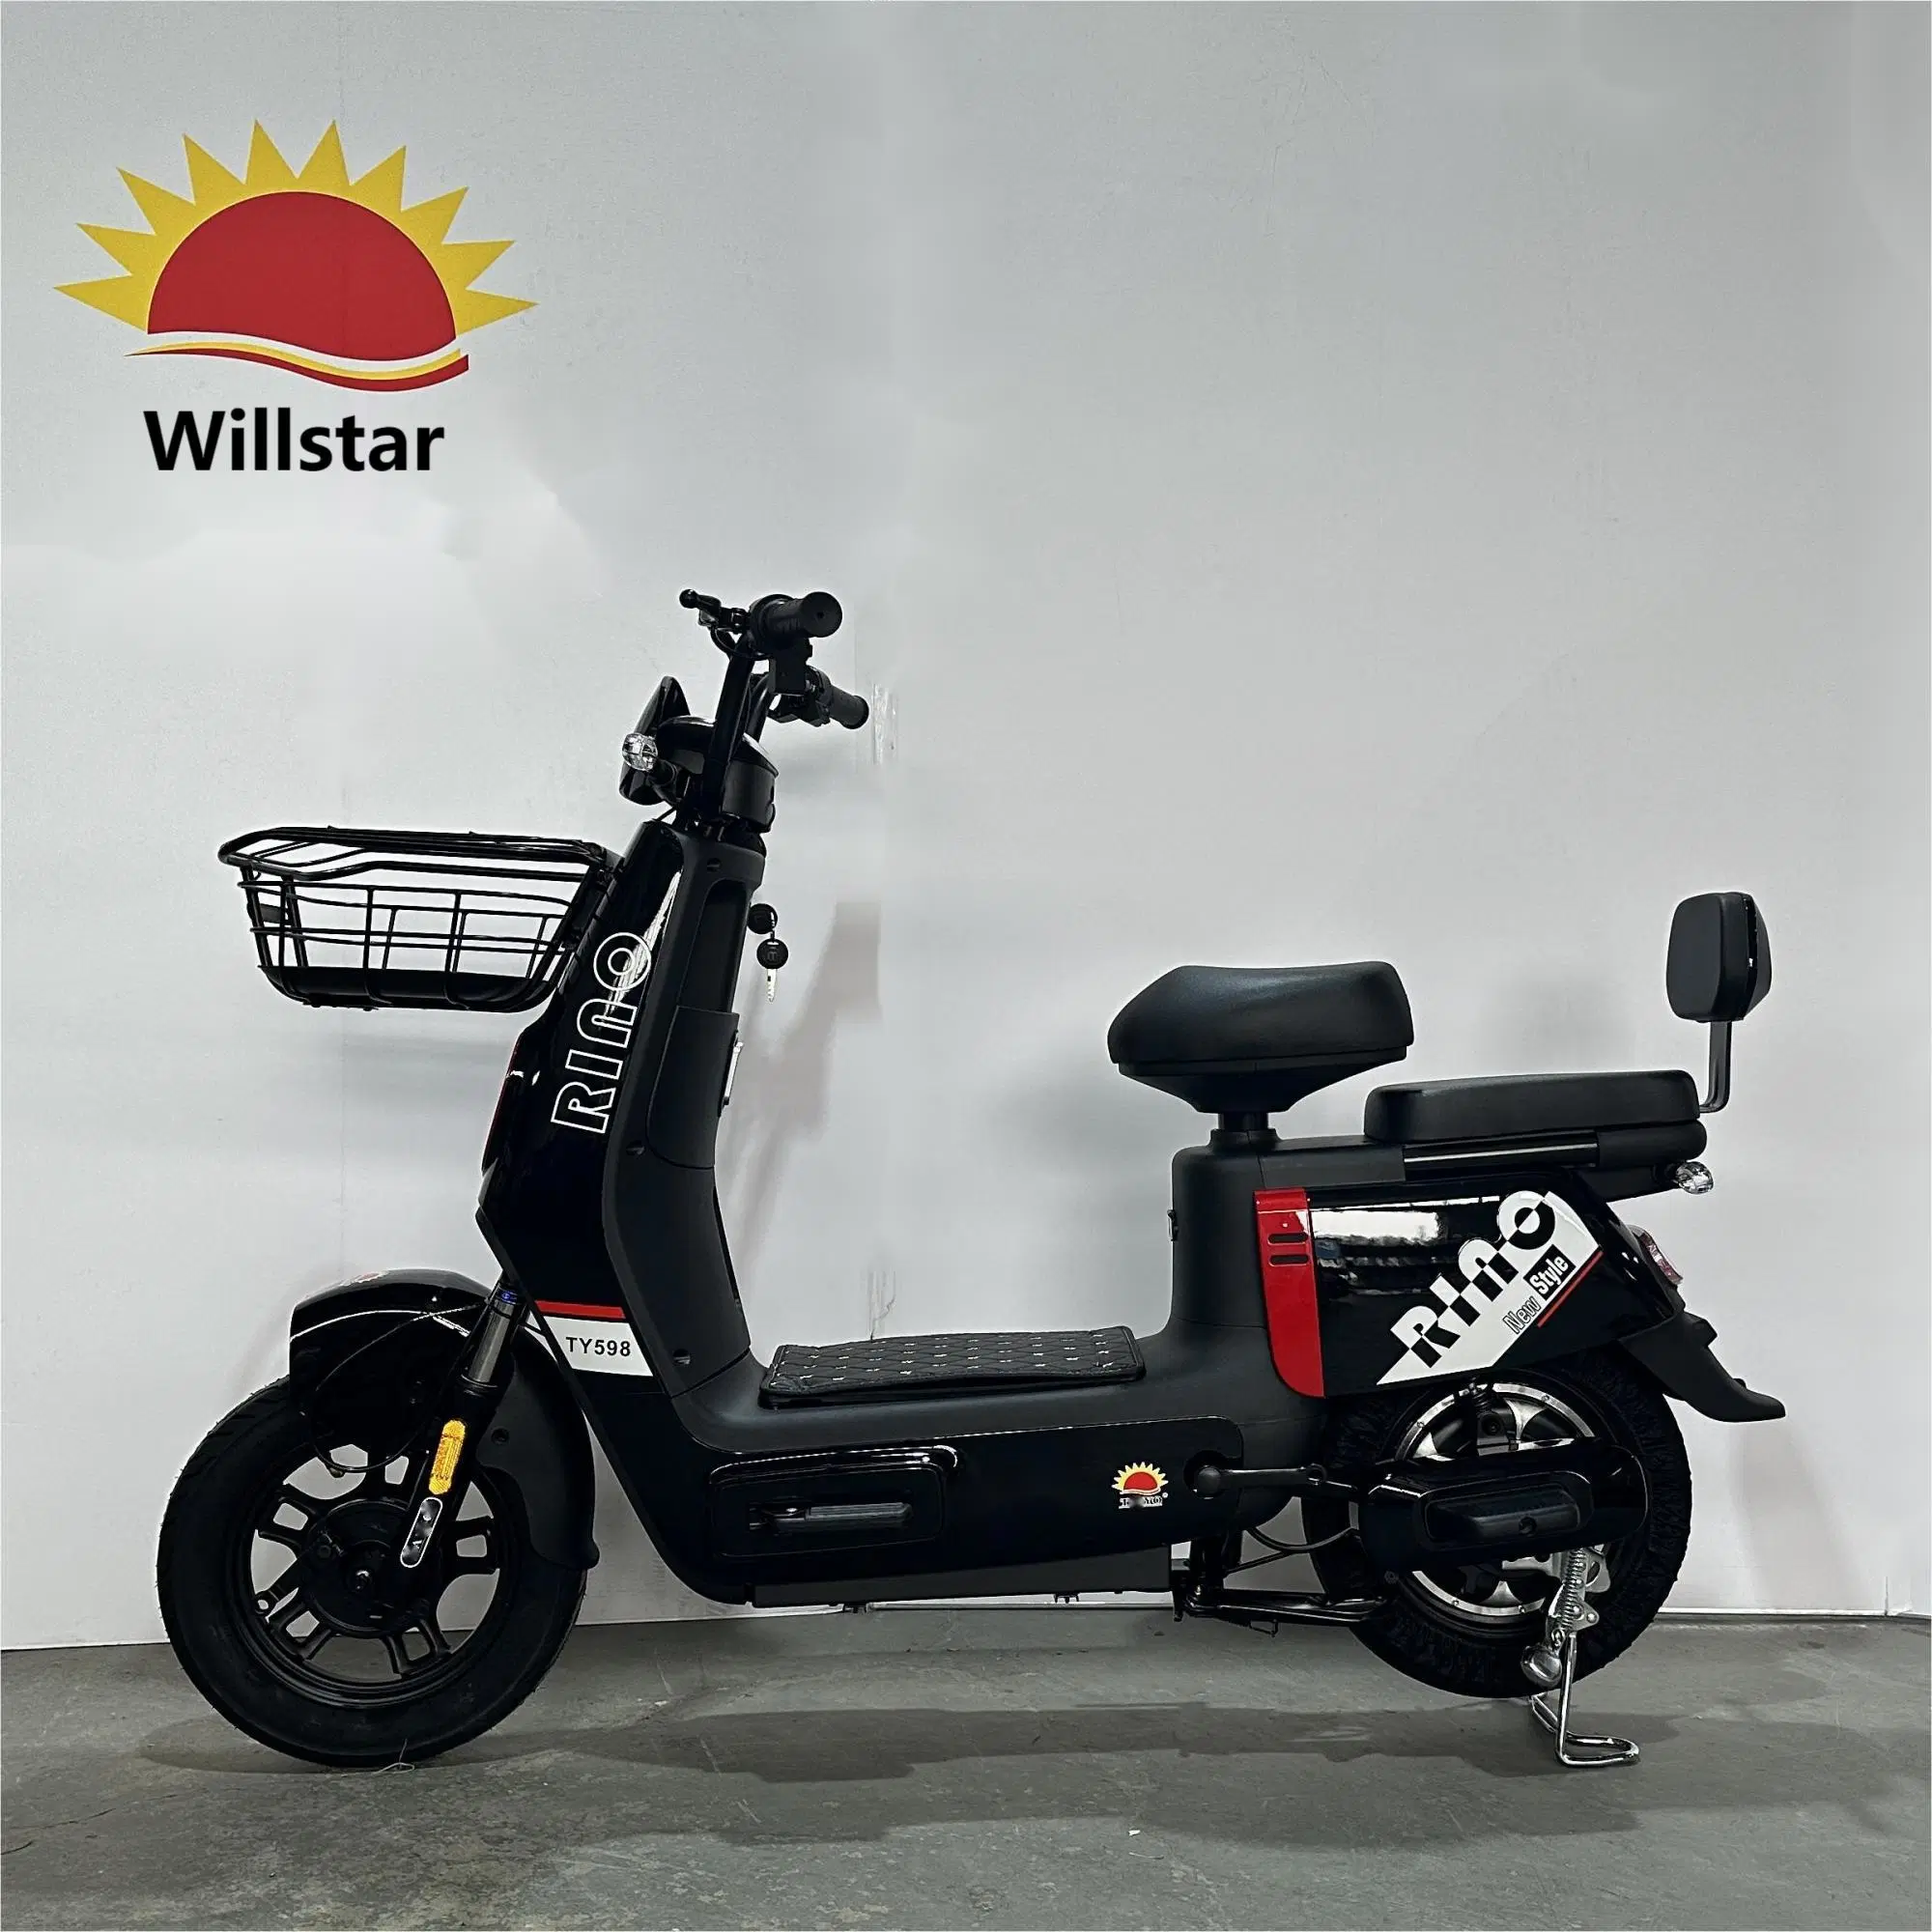 Willstar Electric Bike Ty598 com bateria de chumbo-ácido Chilwee ou Tianneng 48V12ah modelo mais recente